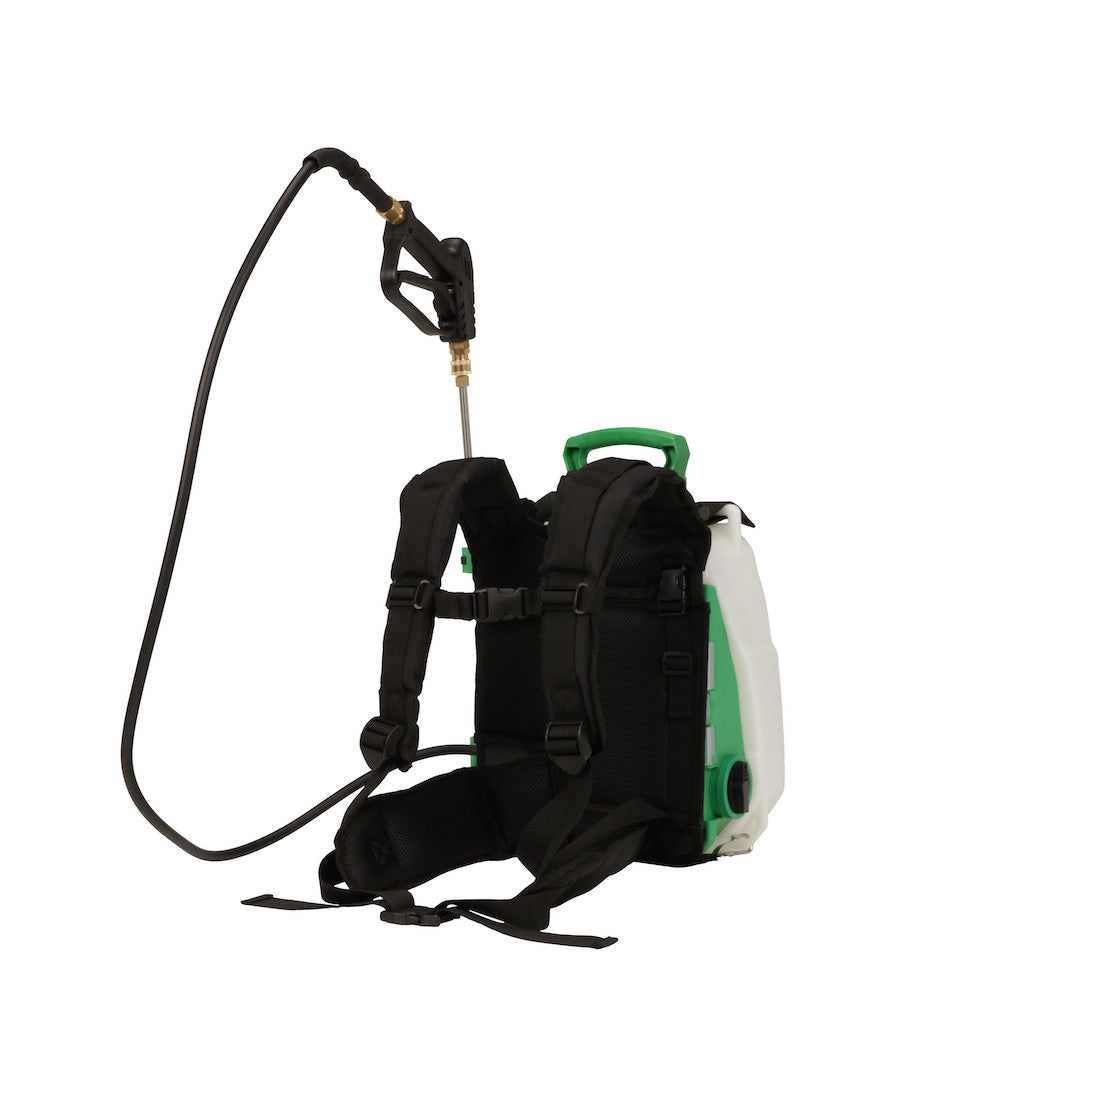 Storm 2.5 Variable Pressure 5-Position Battery Backpack Sprayer (2.5-Gallon)